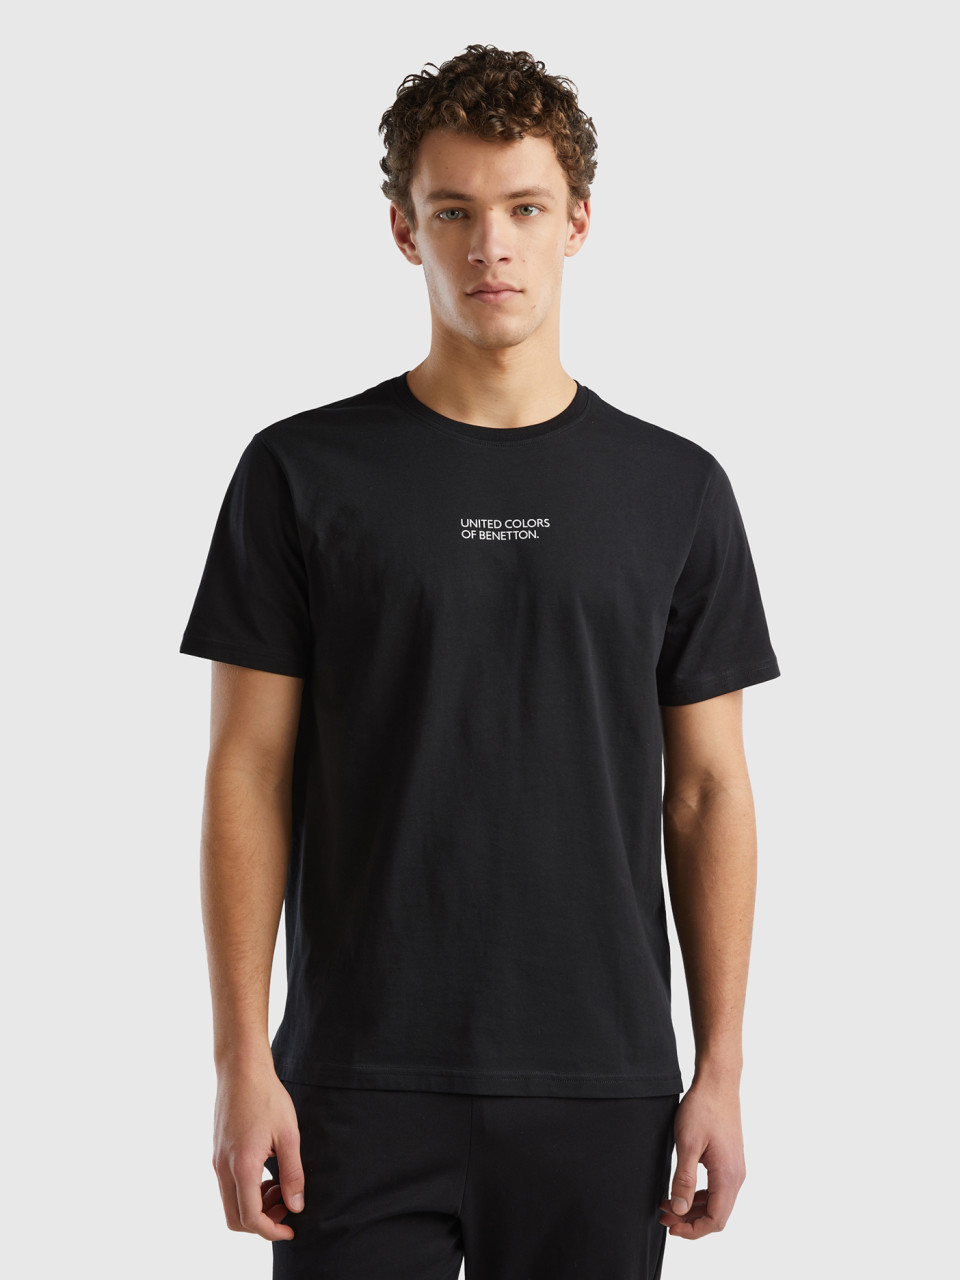 Benetton, T-shirt With Logo Print, Black, Men